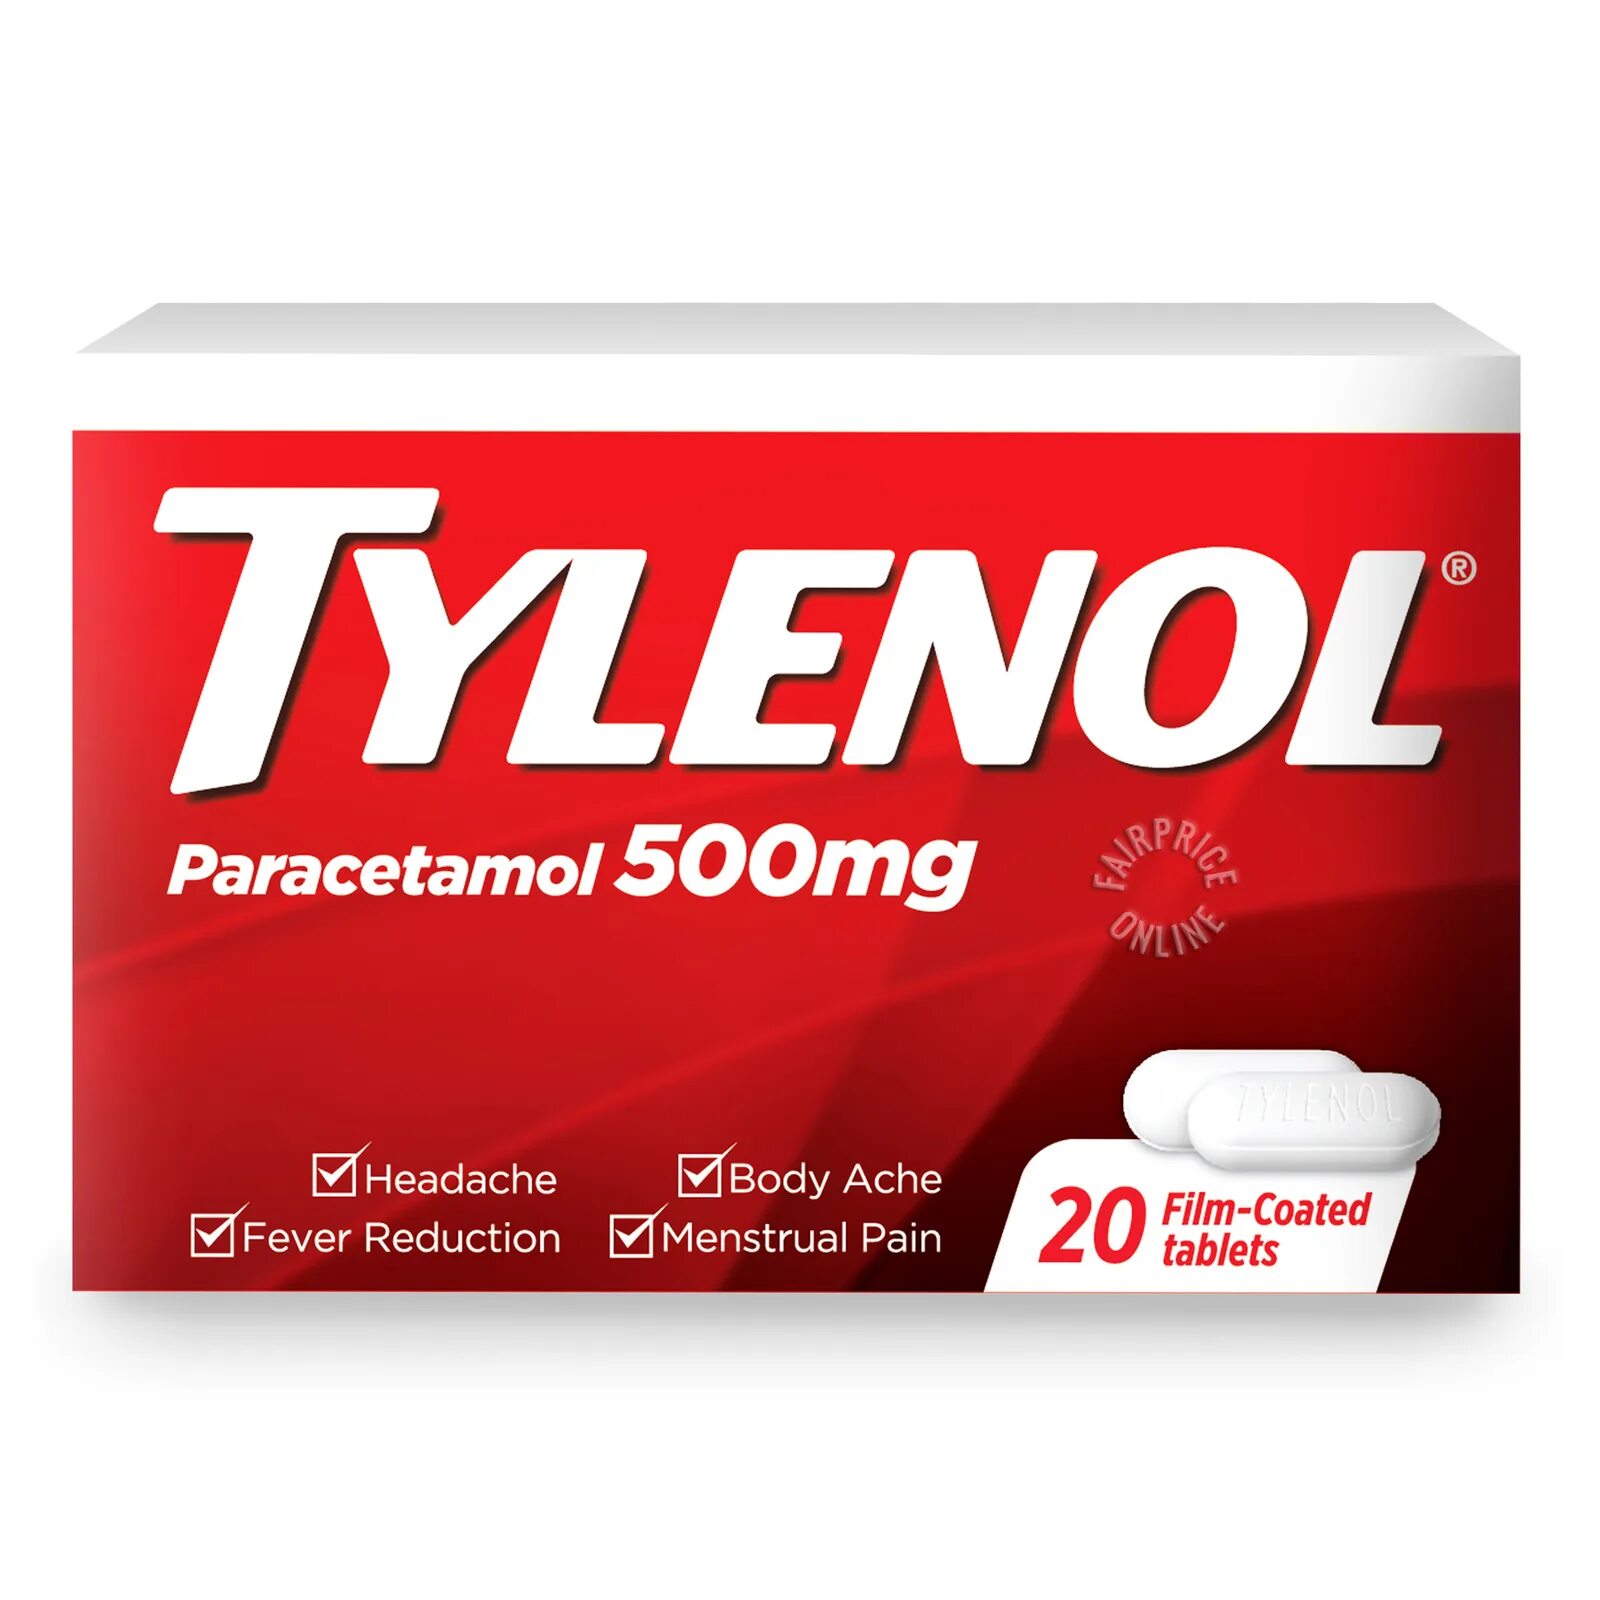 Тайленол это. Тайленол 500. Tylenol таблетки 500. Tylenol лекарство. Tylenol paracetamol.